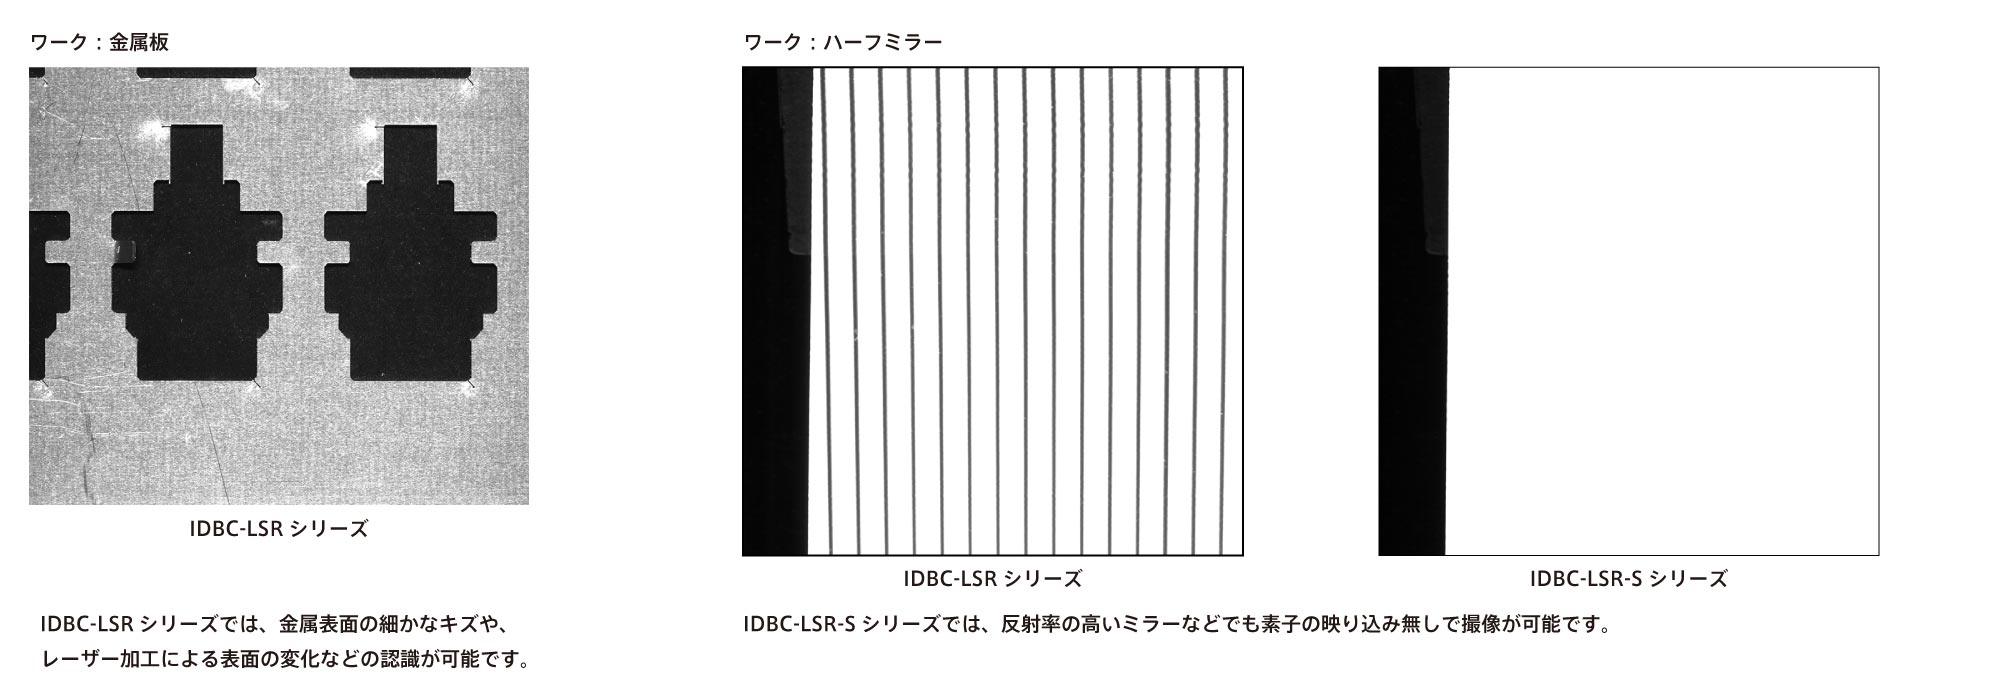 IDBC-LSR Product Description 08